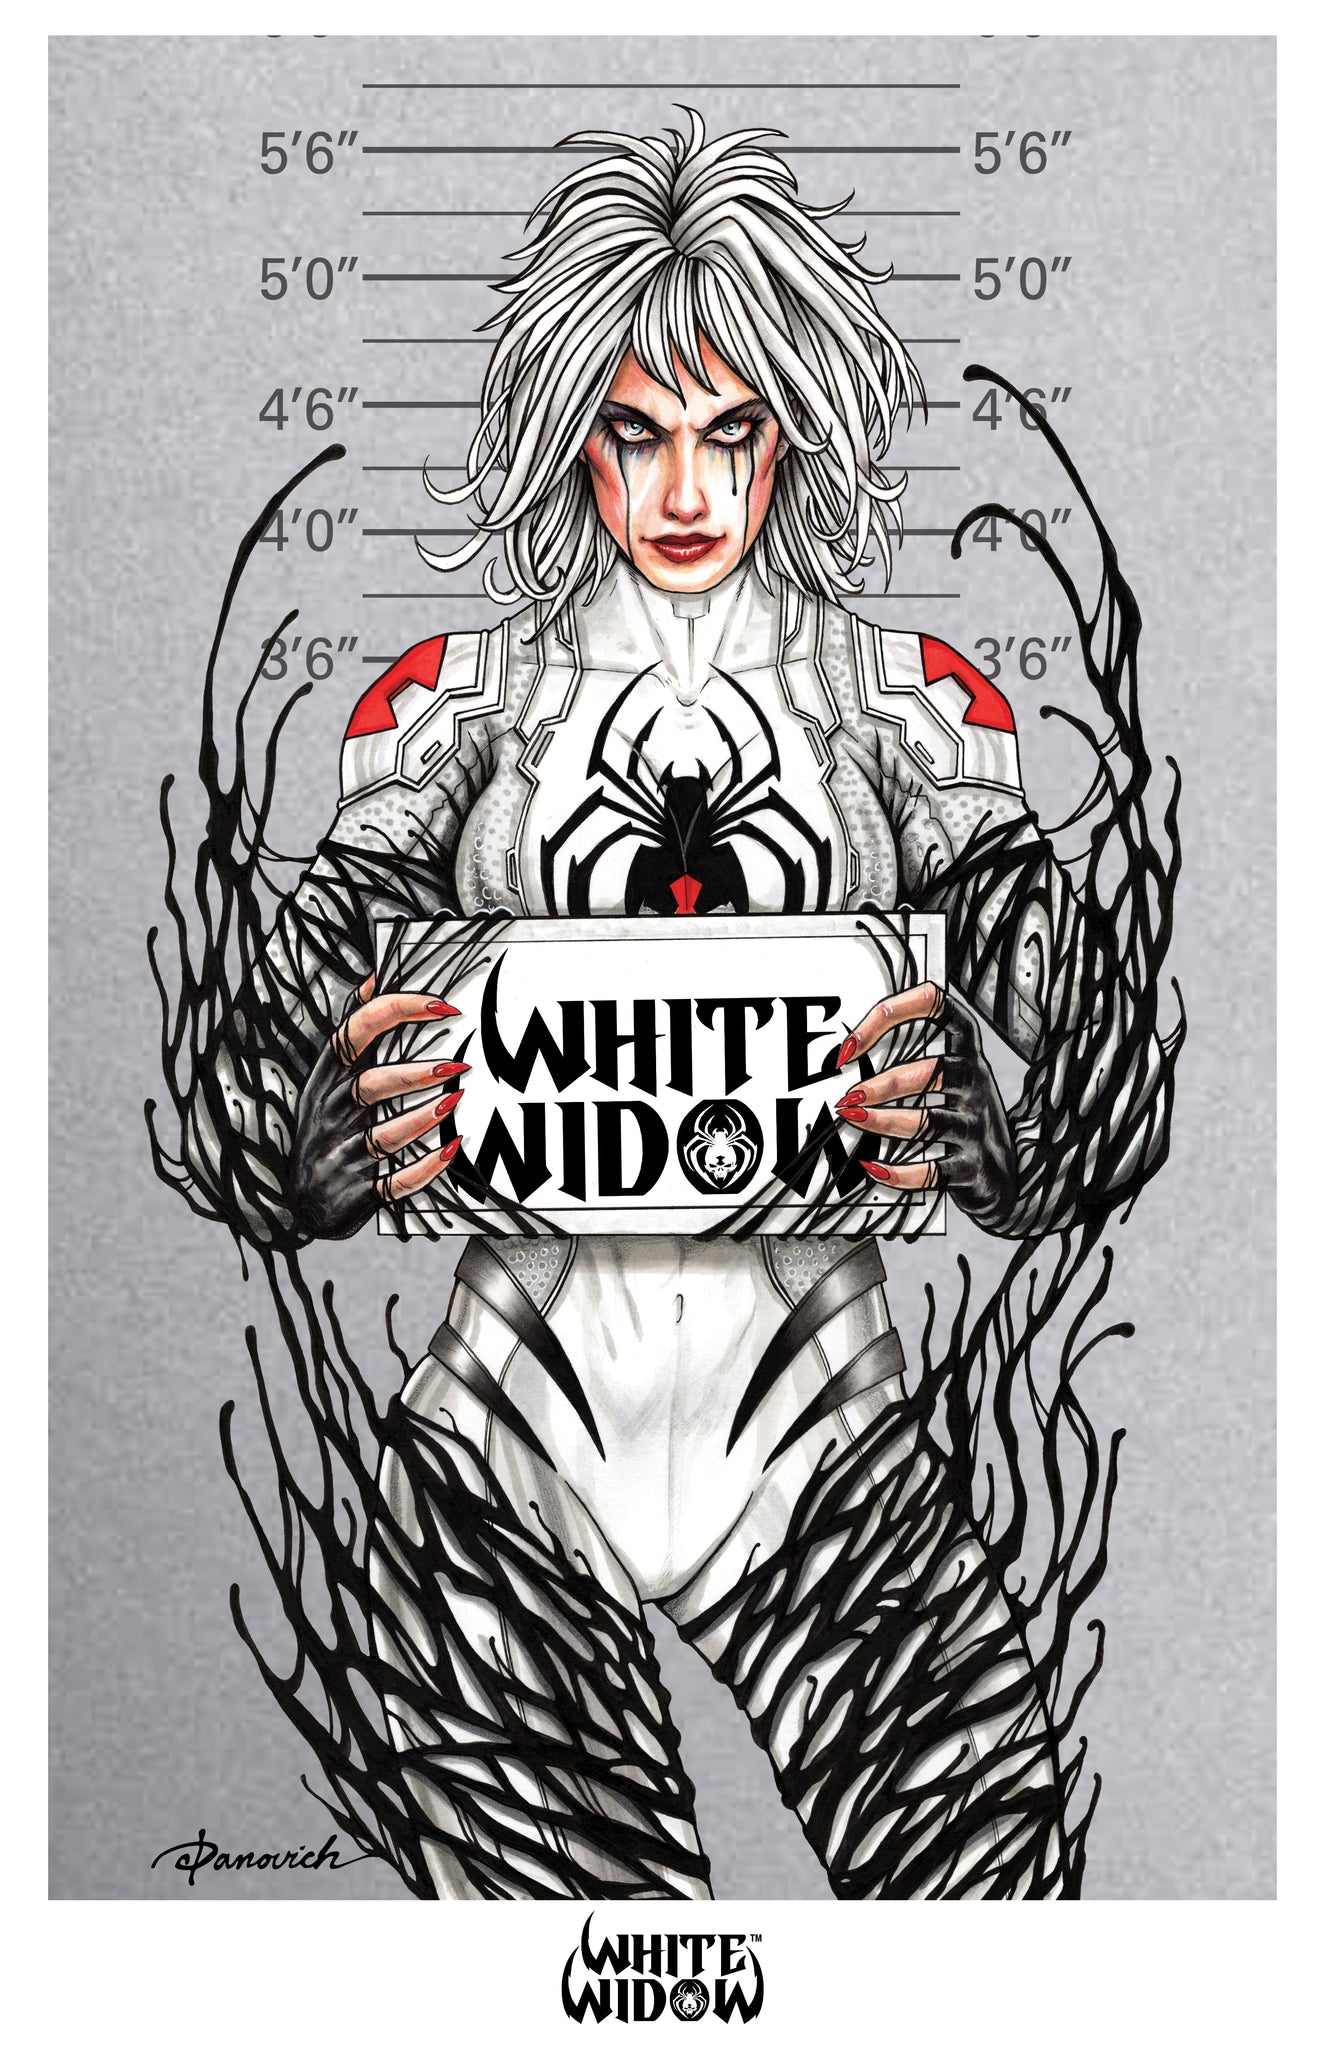 11x17 PRINT – White Widow #03 – Len Danovich 01